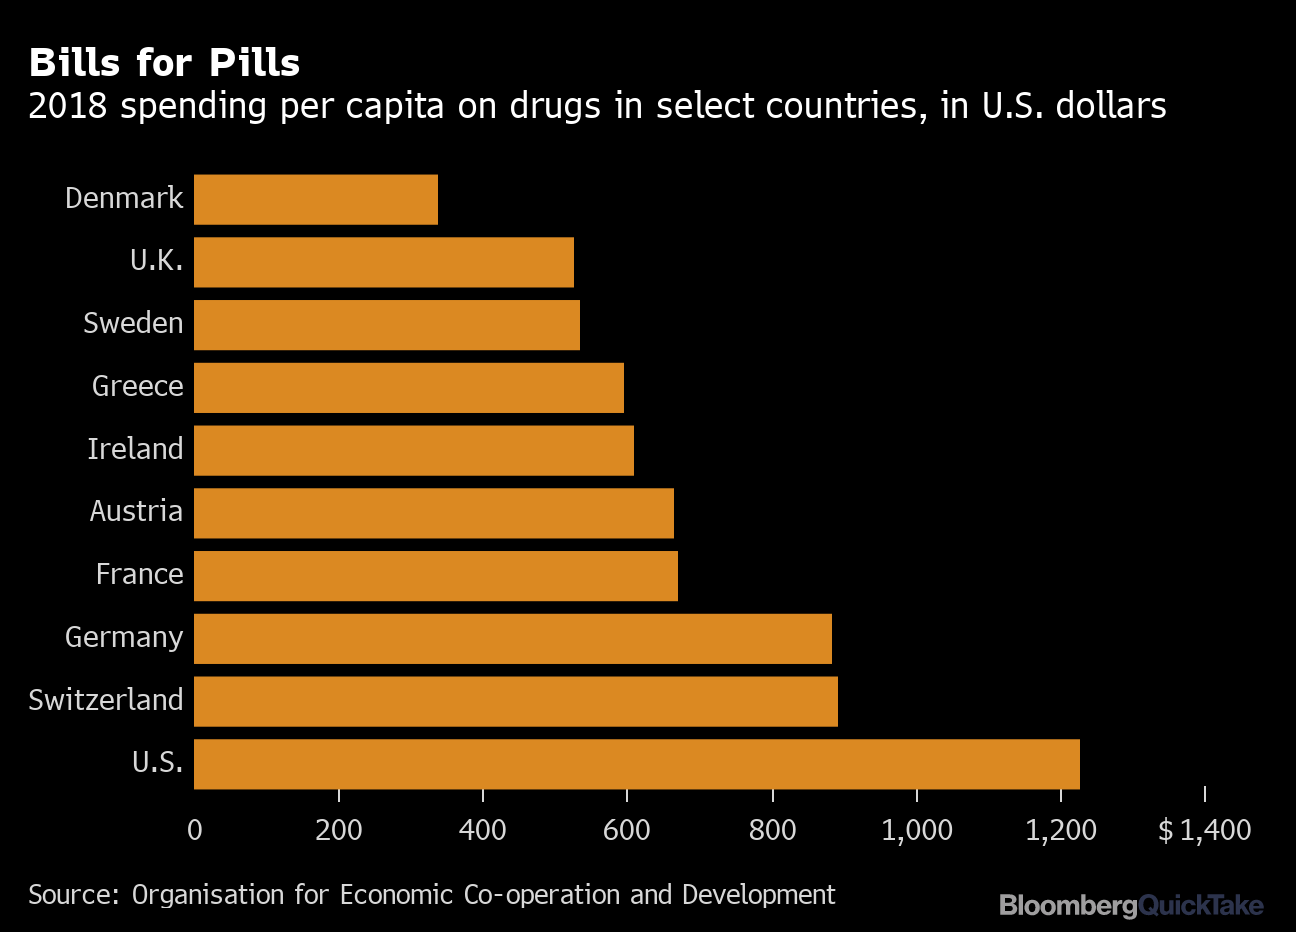 Black Market Prices For Drugs